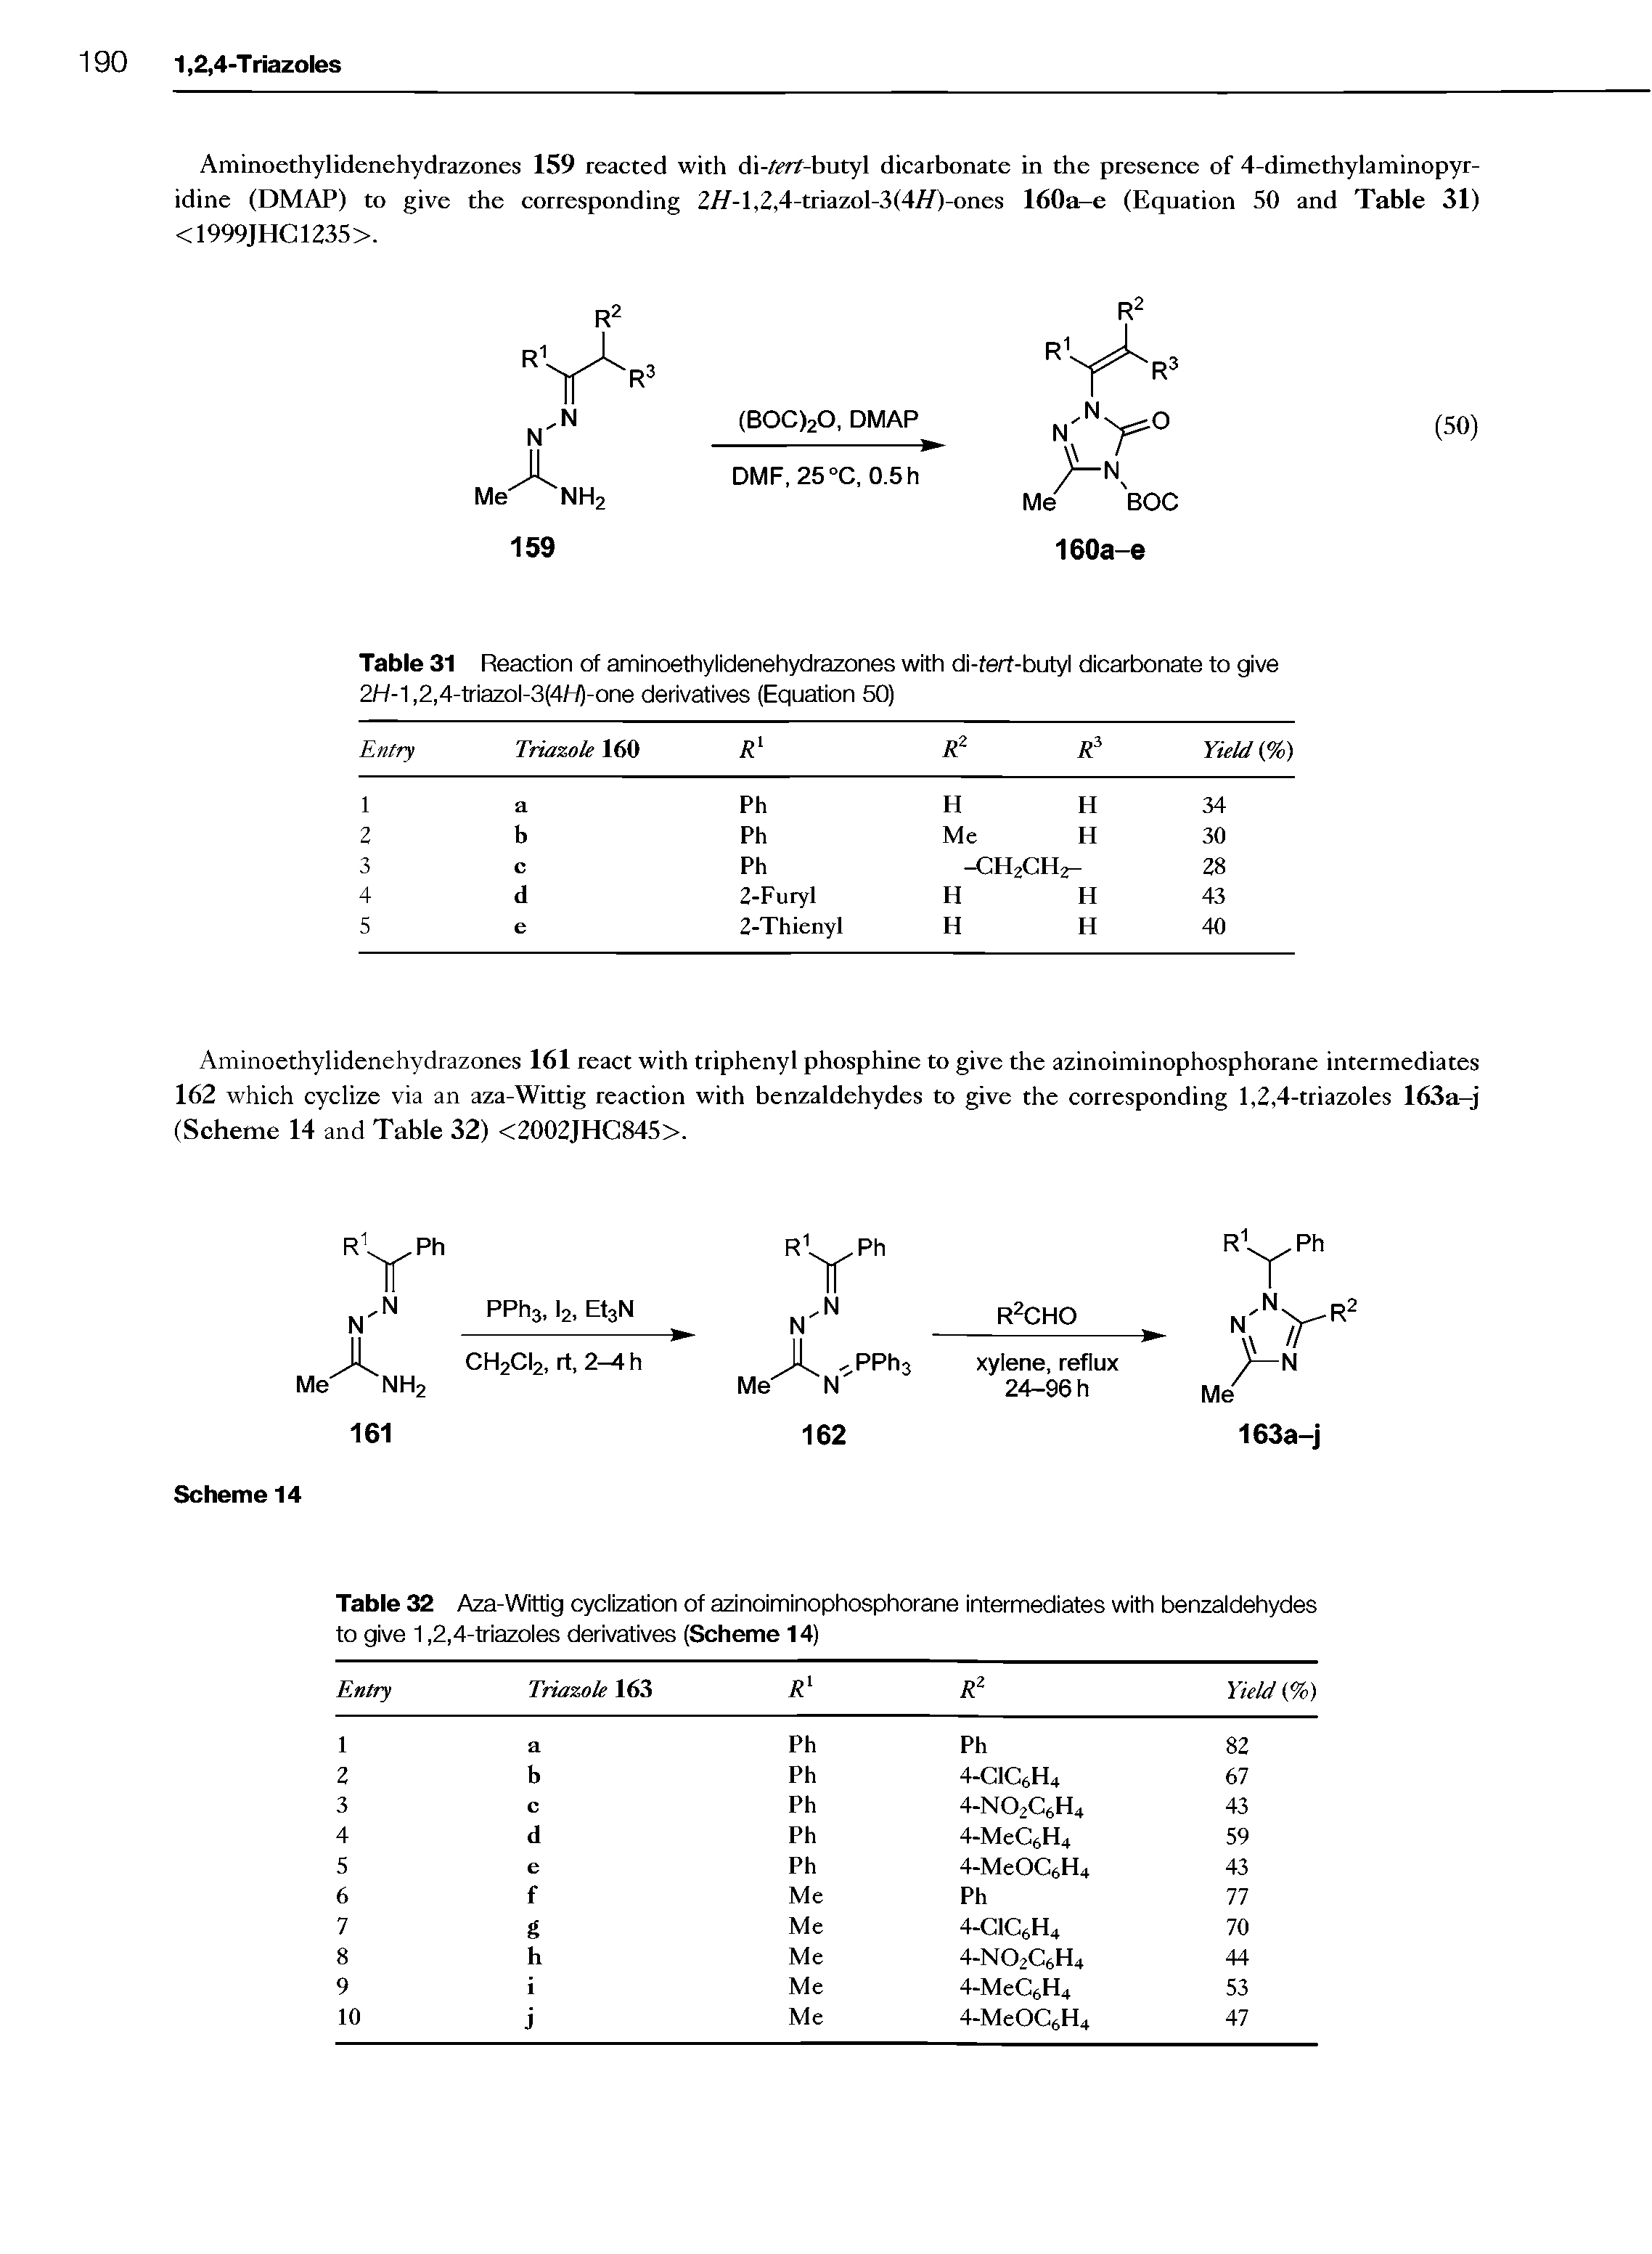 Table 32 Aza-Wittig cyclization of azinoiminophosphorane intermediates with benzaldehydes to give 1,2,4-triazoles derivatives (Scheme 14) ...